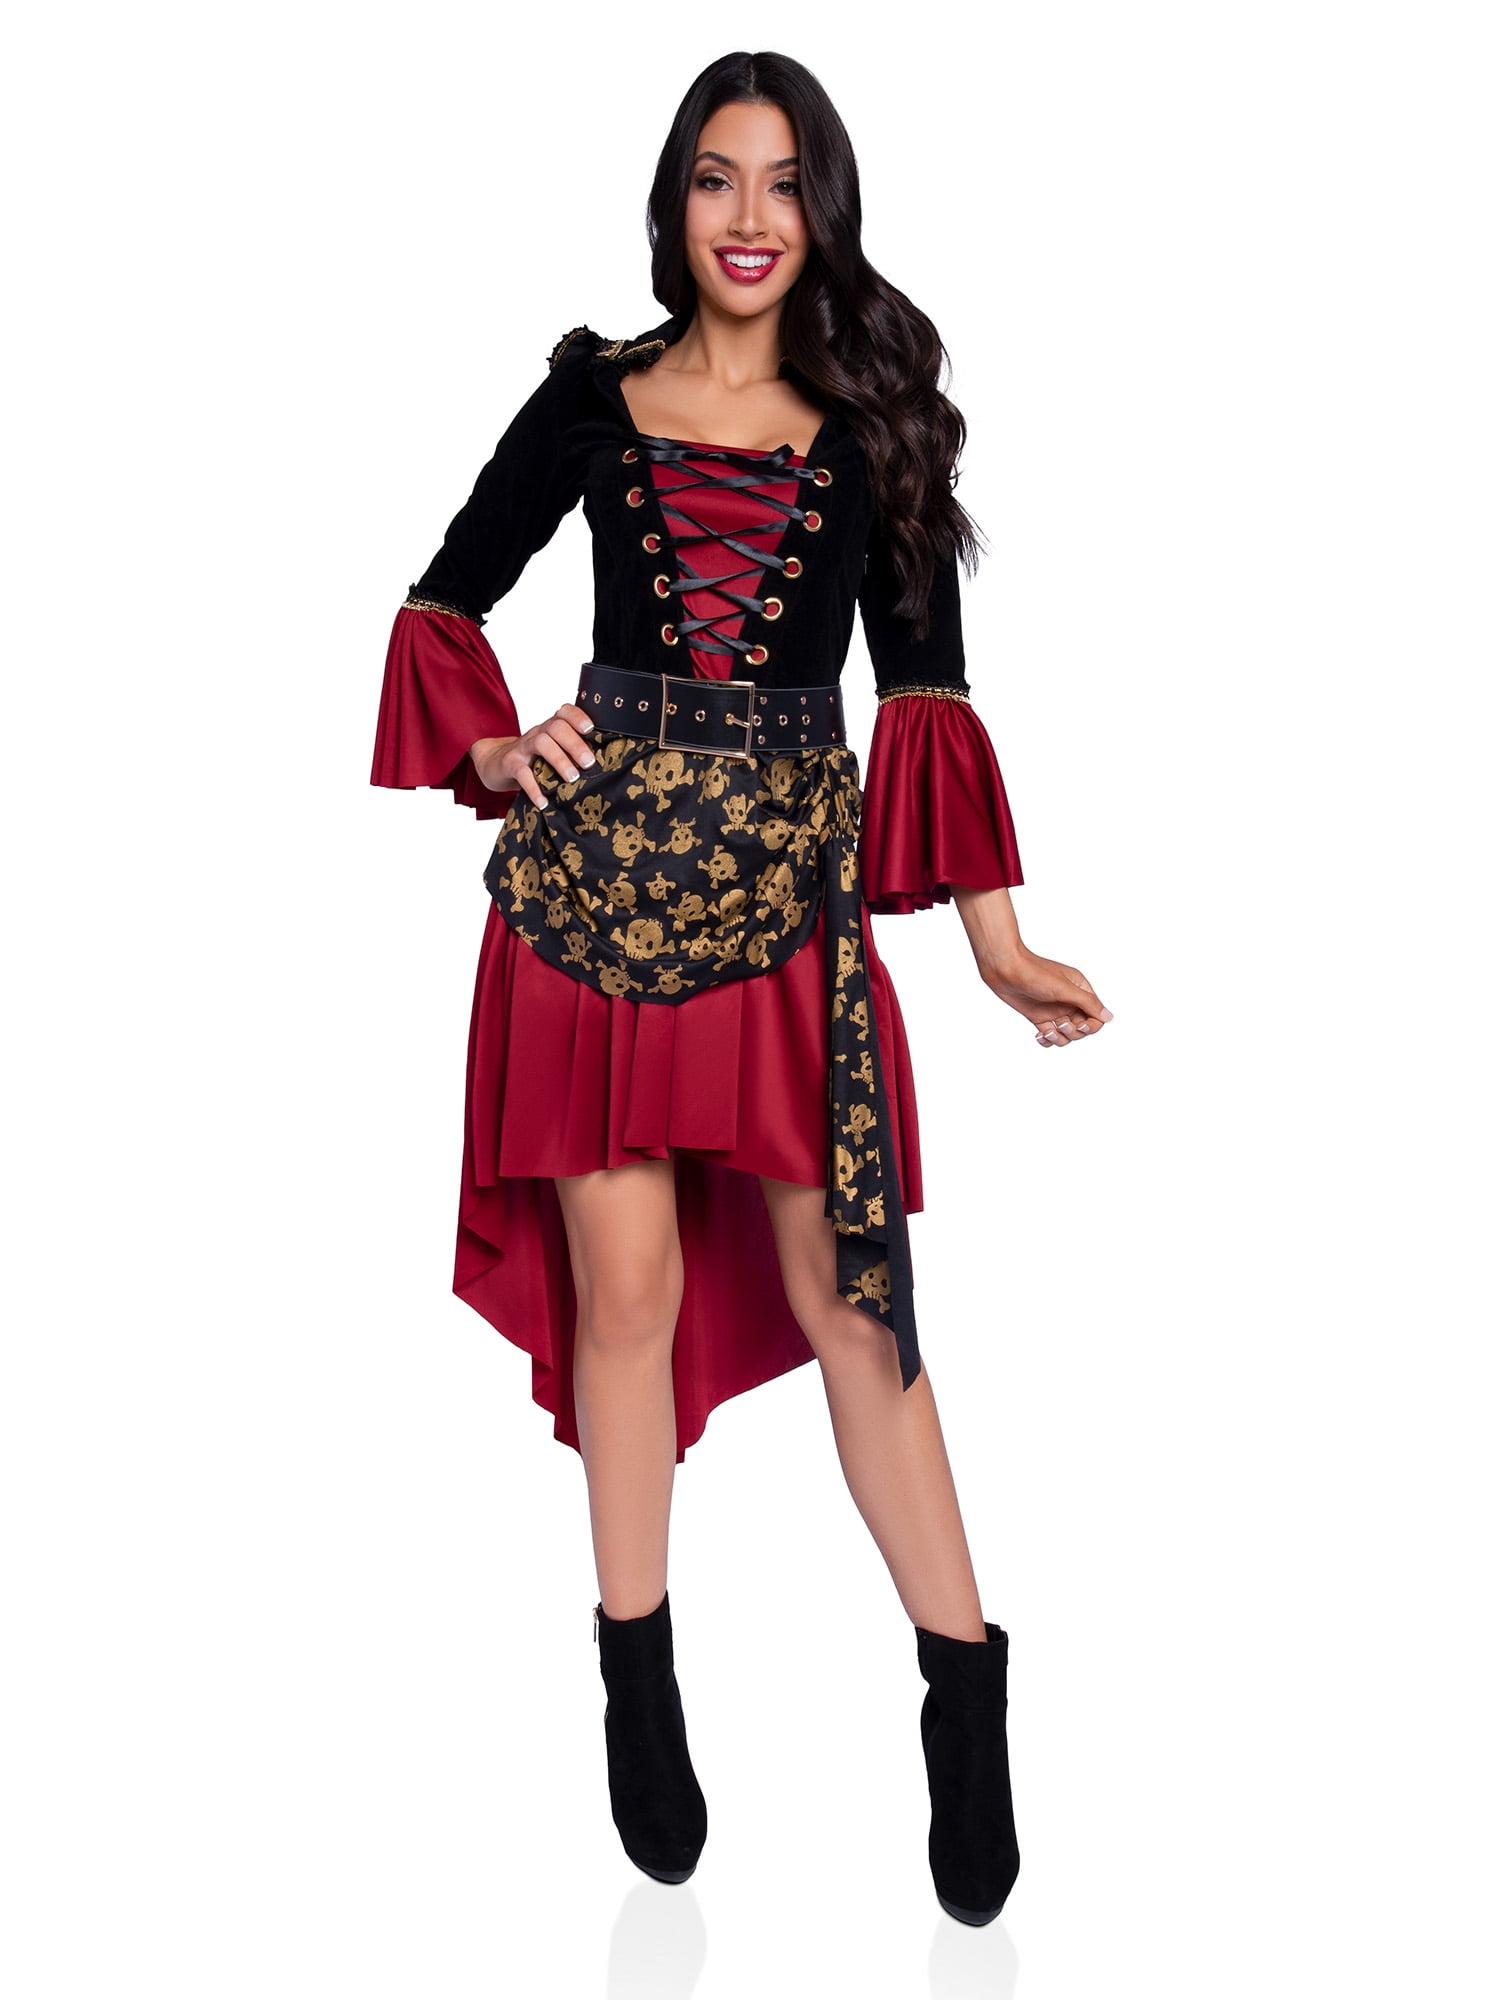 Wonderland Women's Halloween Pirate Captain Fancy Dress Costume for Adult, L - Walmart.com